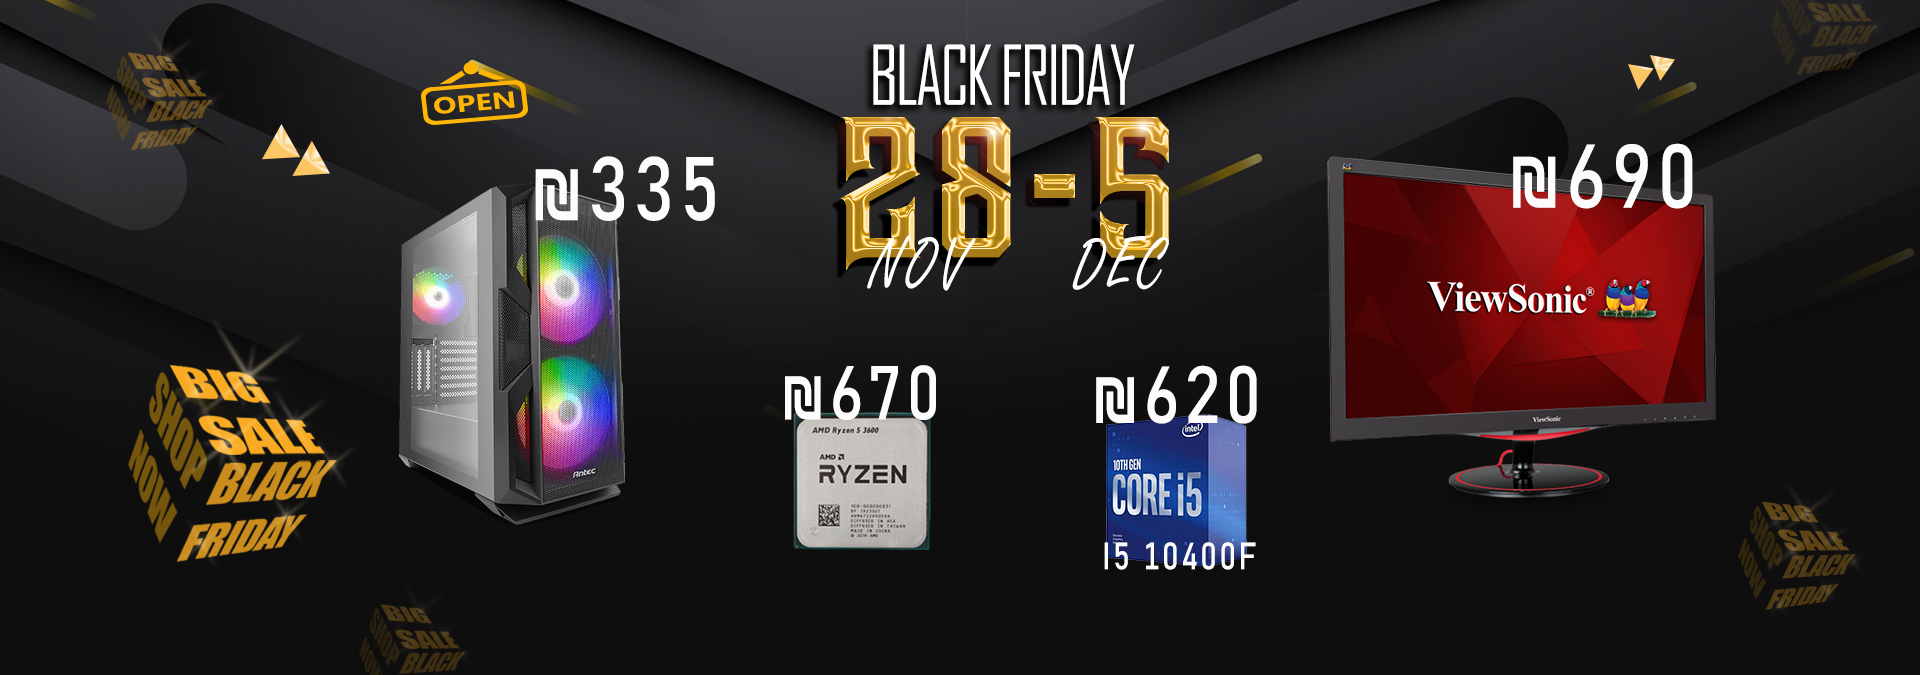 Black Friday Sale (1)